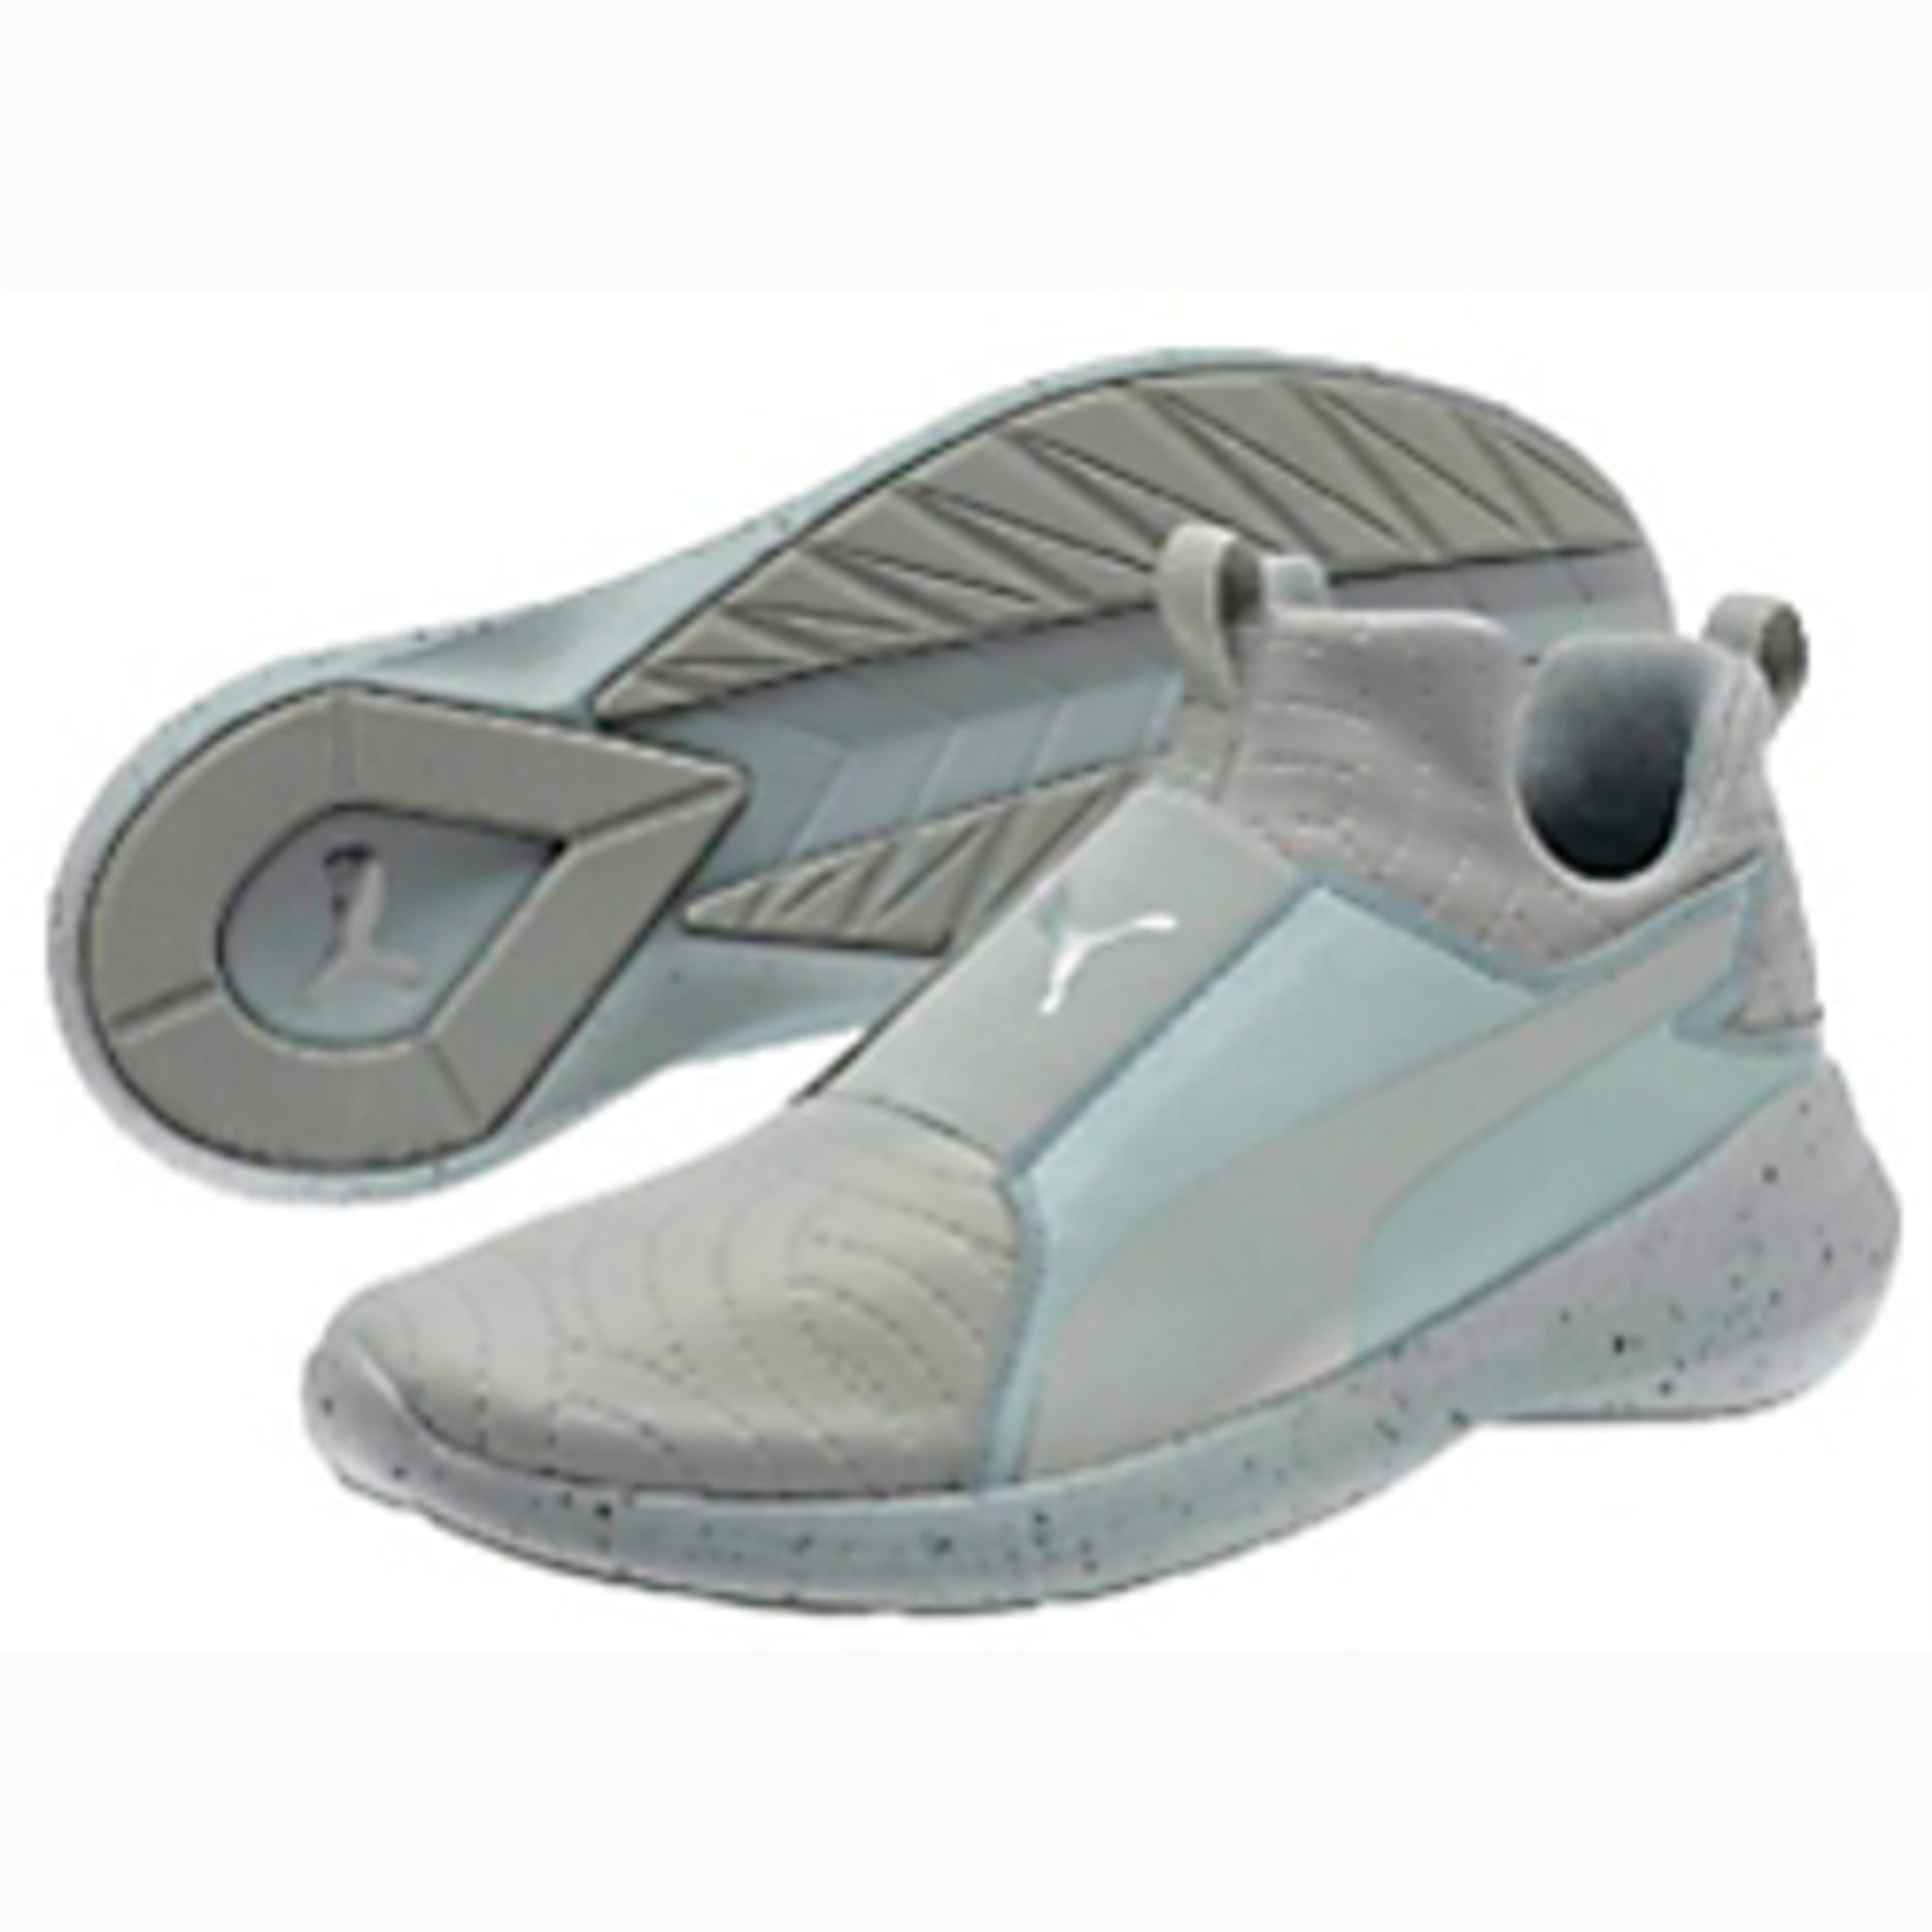 rebel sport puma shoes